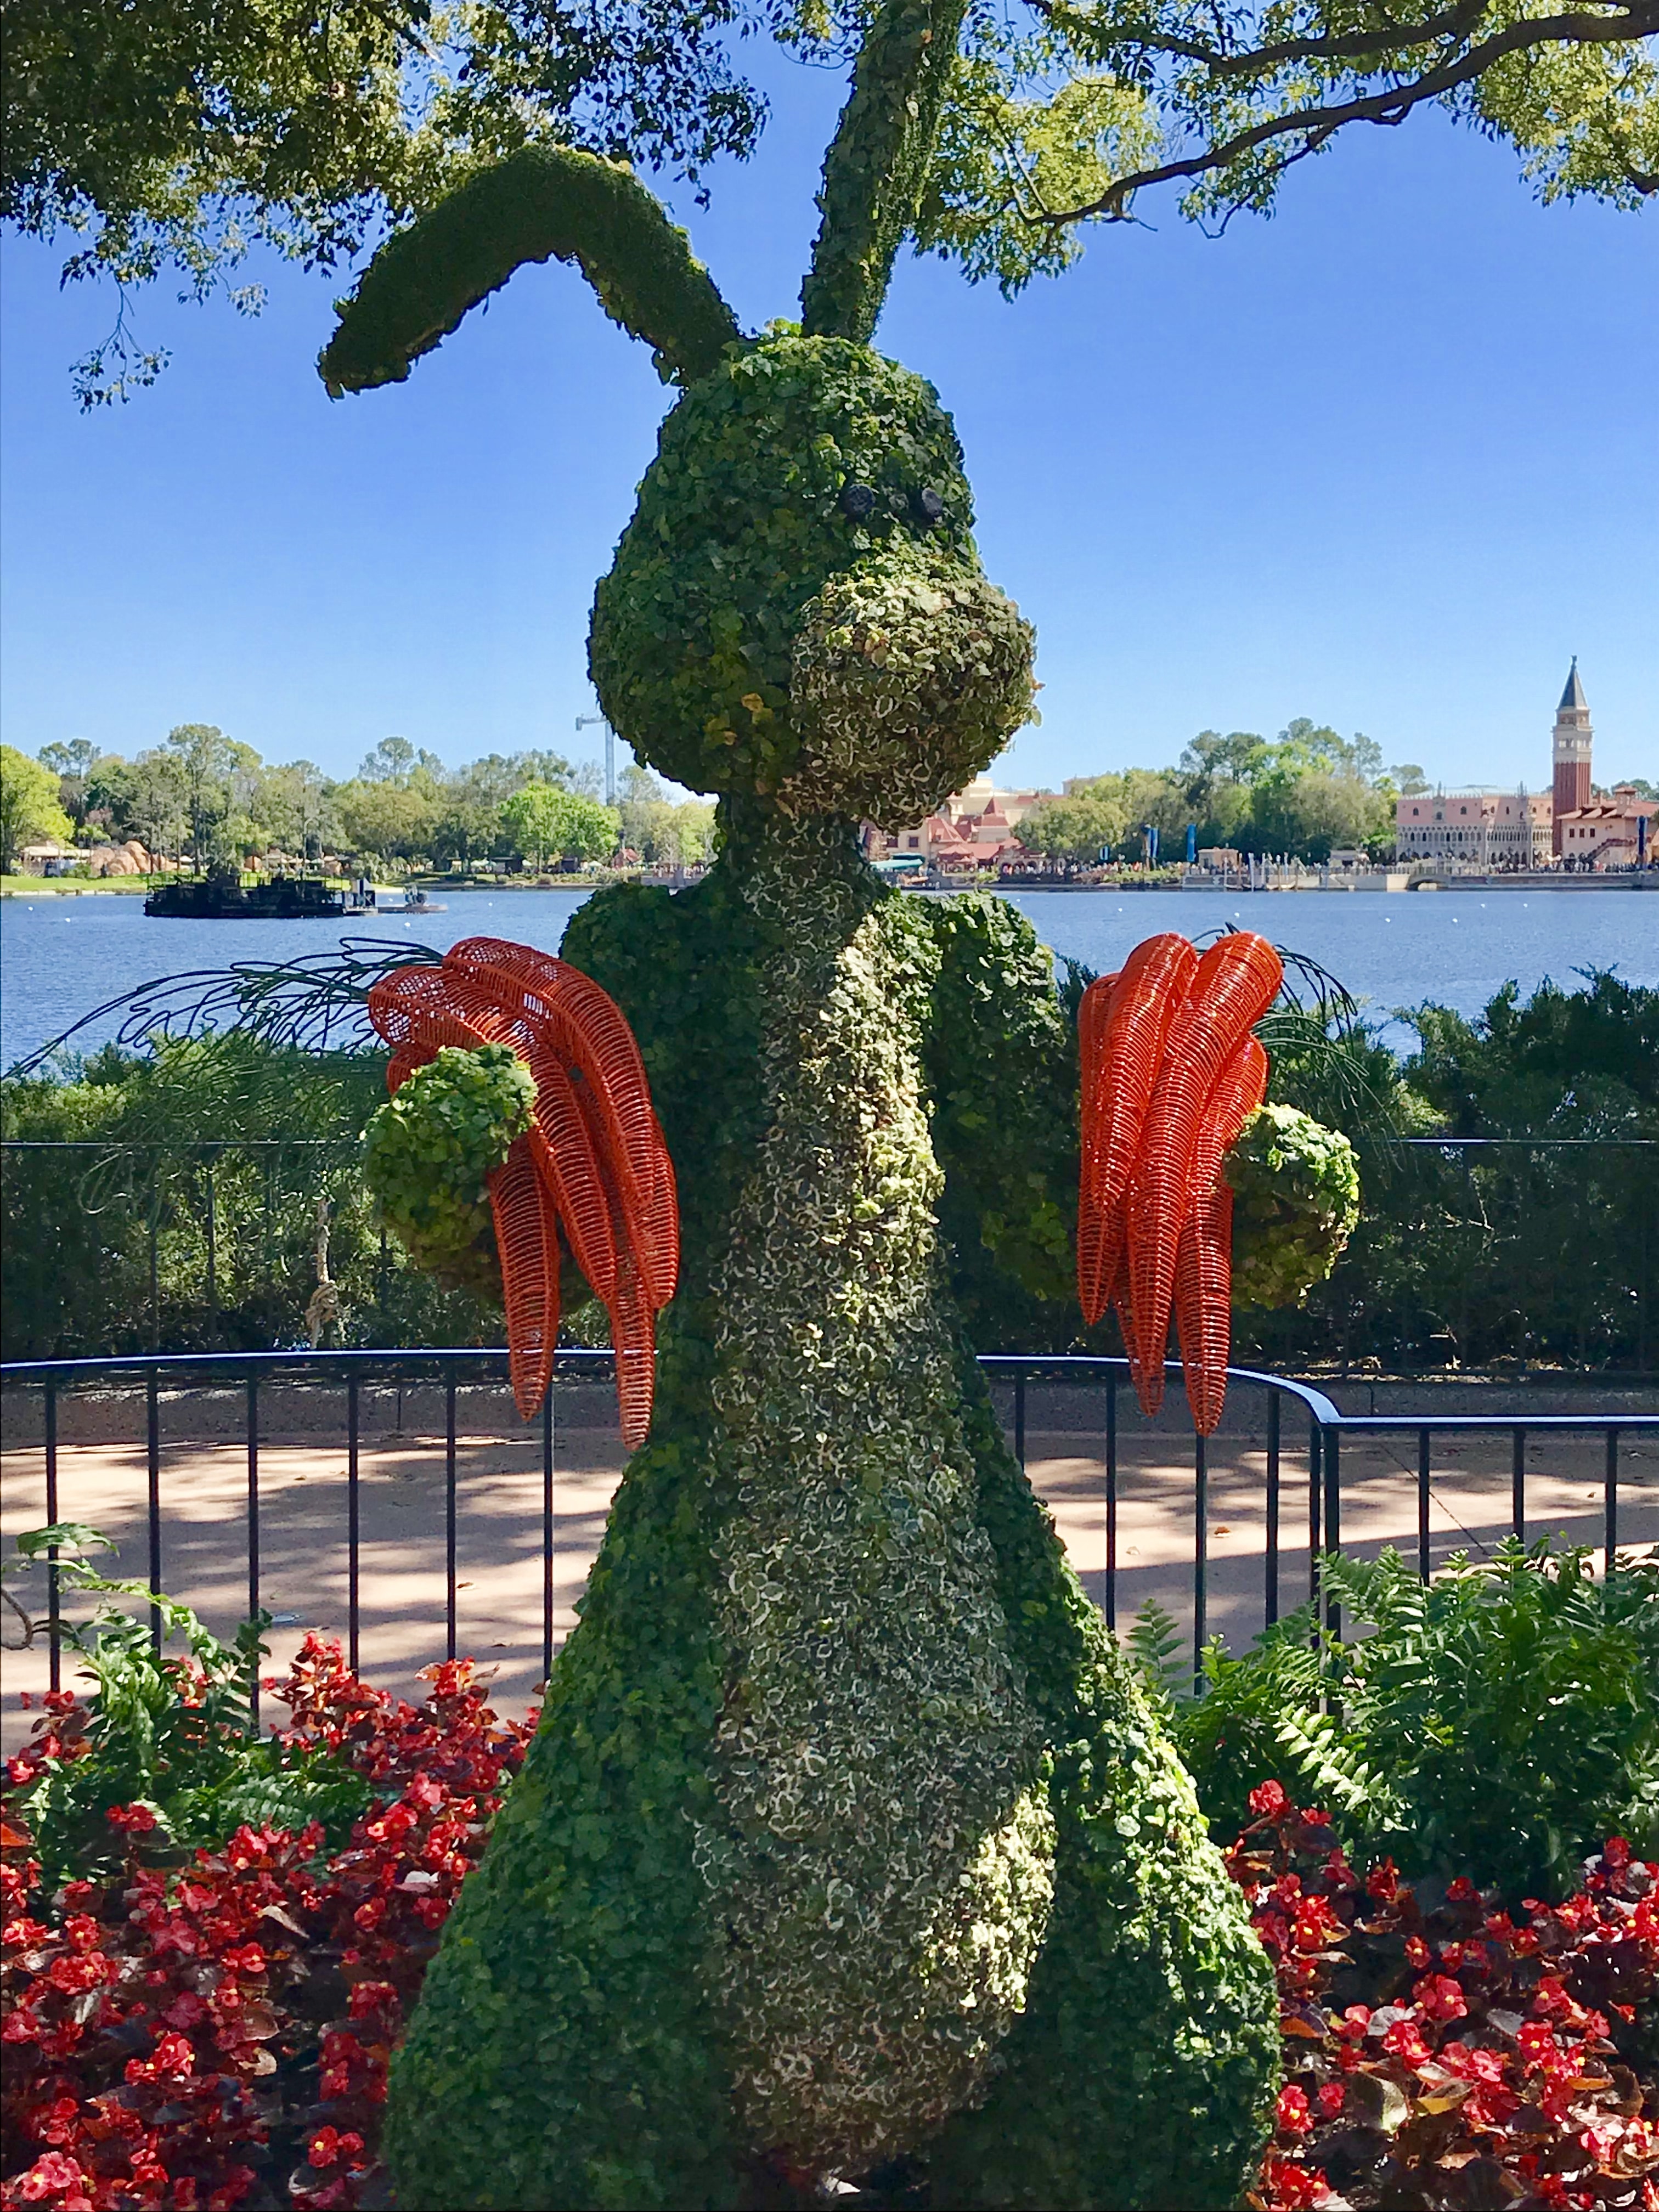 Rabbit at Disney's Epcot Flower and Garden Festival 2018